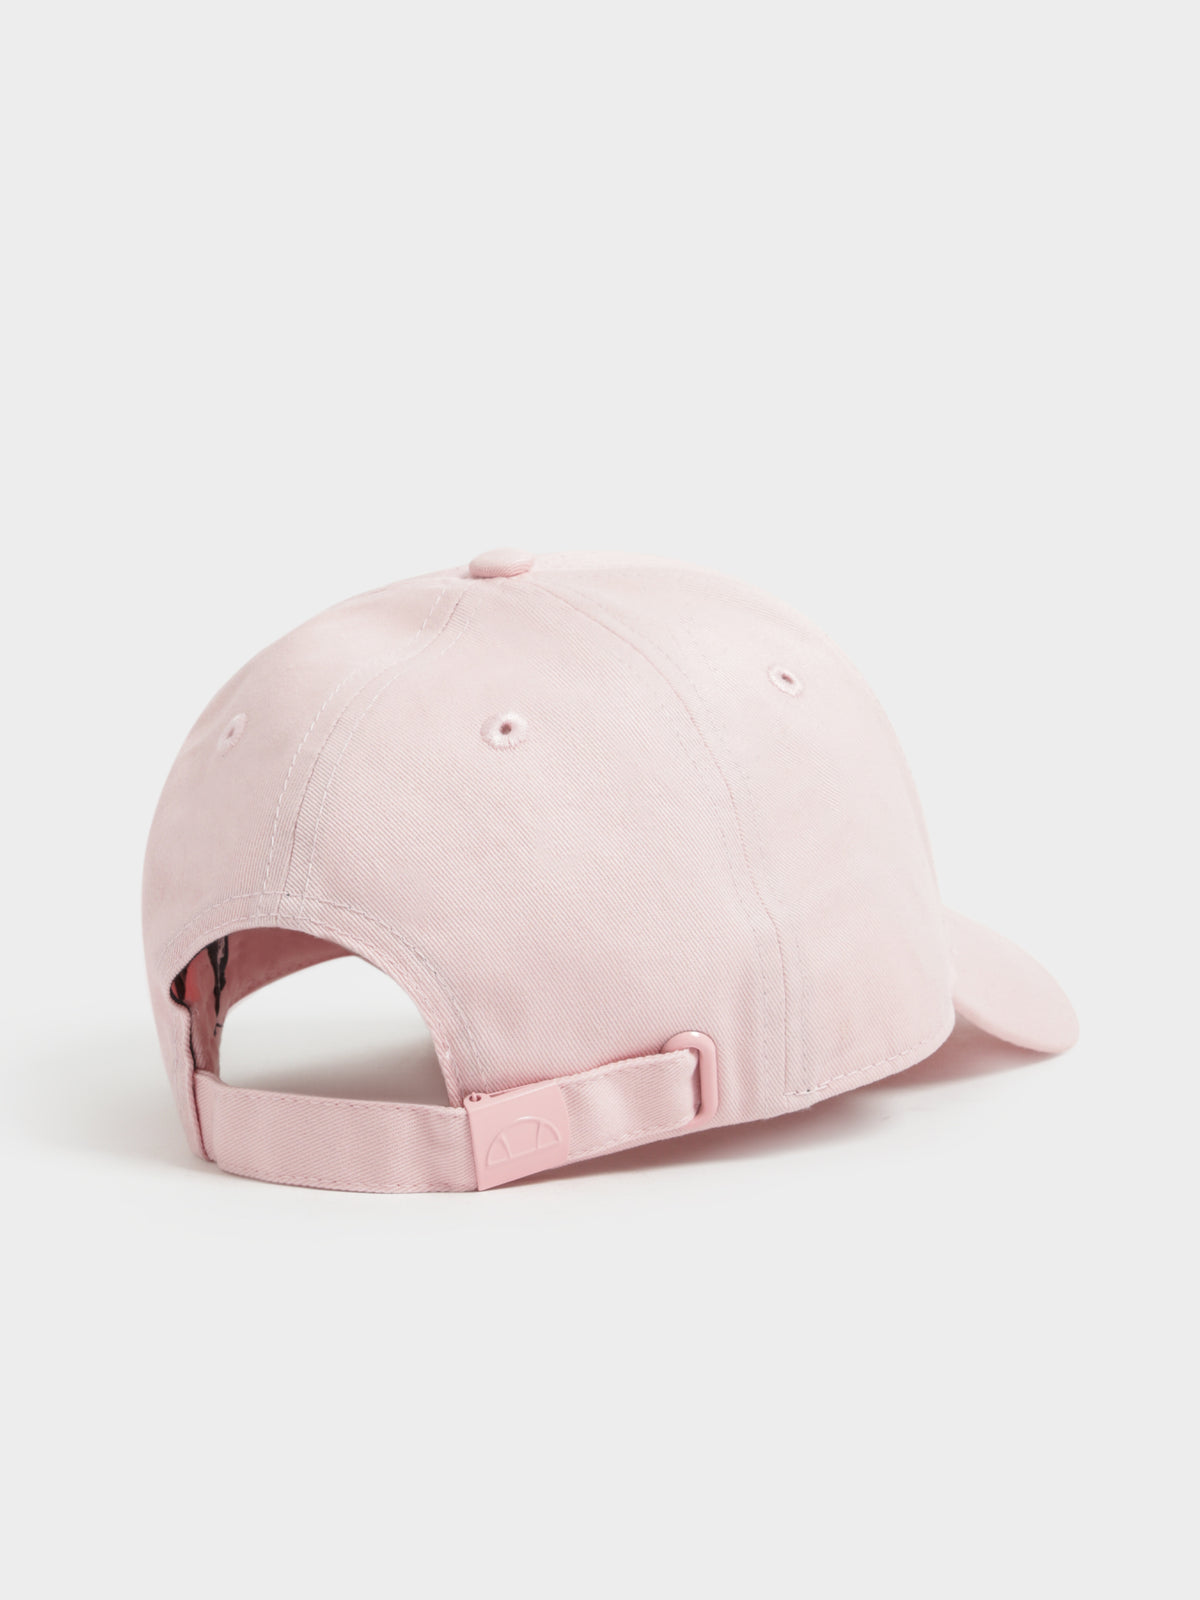 Dazara Cap in Light Pink